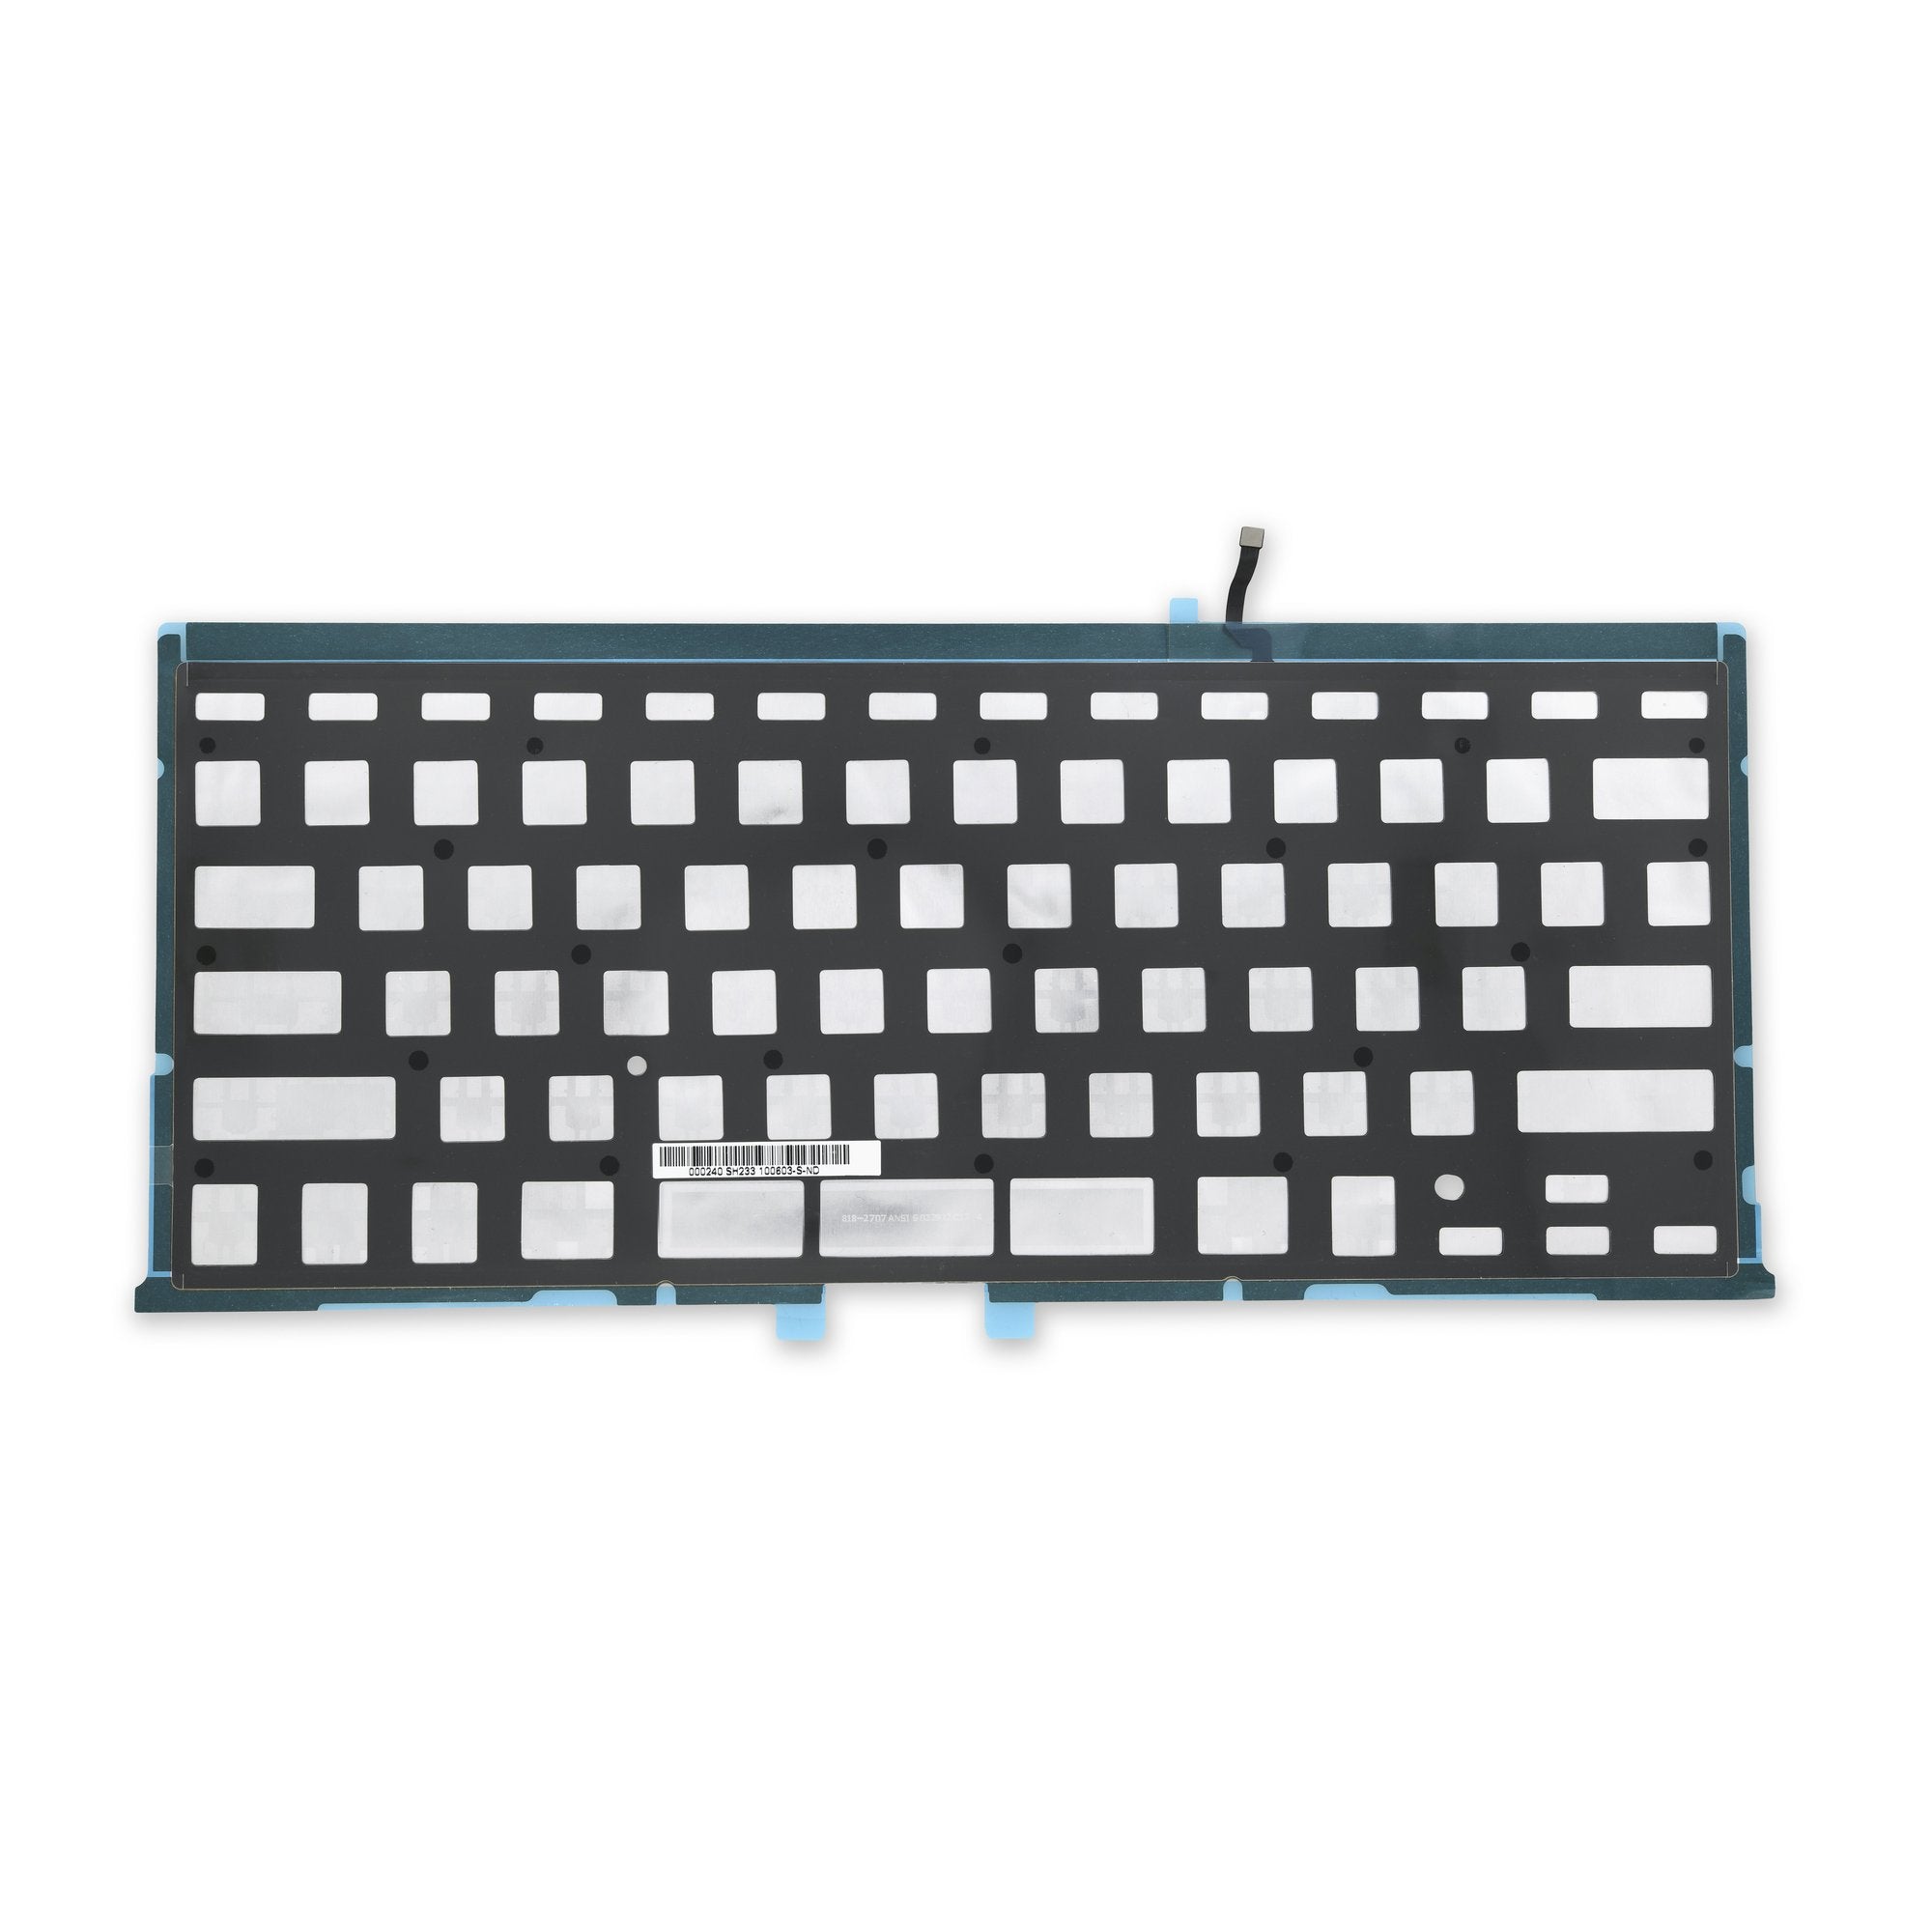 MacBook Pro 15" Retina (Mid 2012-Mid 2015) Keyboard Backlight New